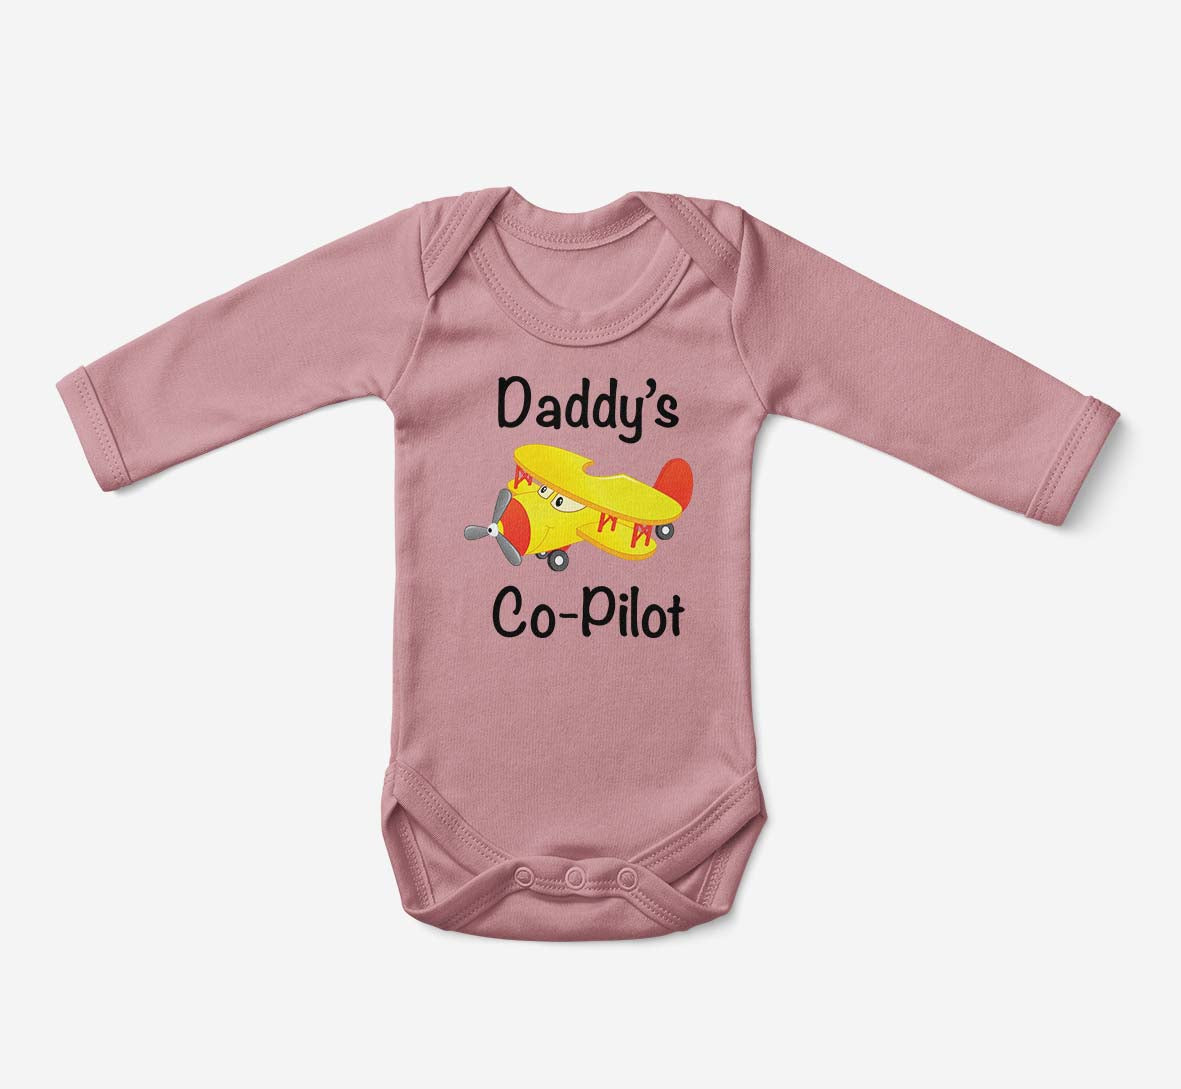 Daddy's Co-Pilot (Propeller2) Designed Baby Bodysuits